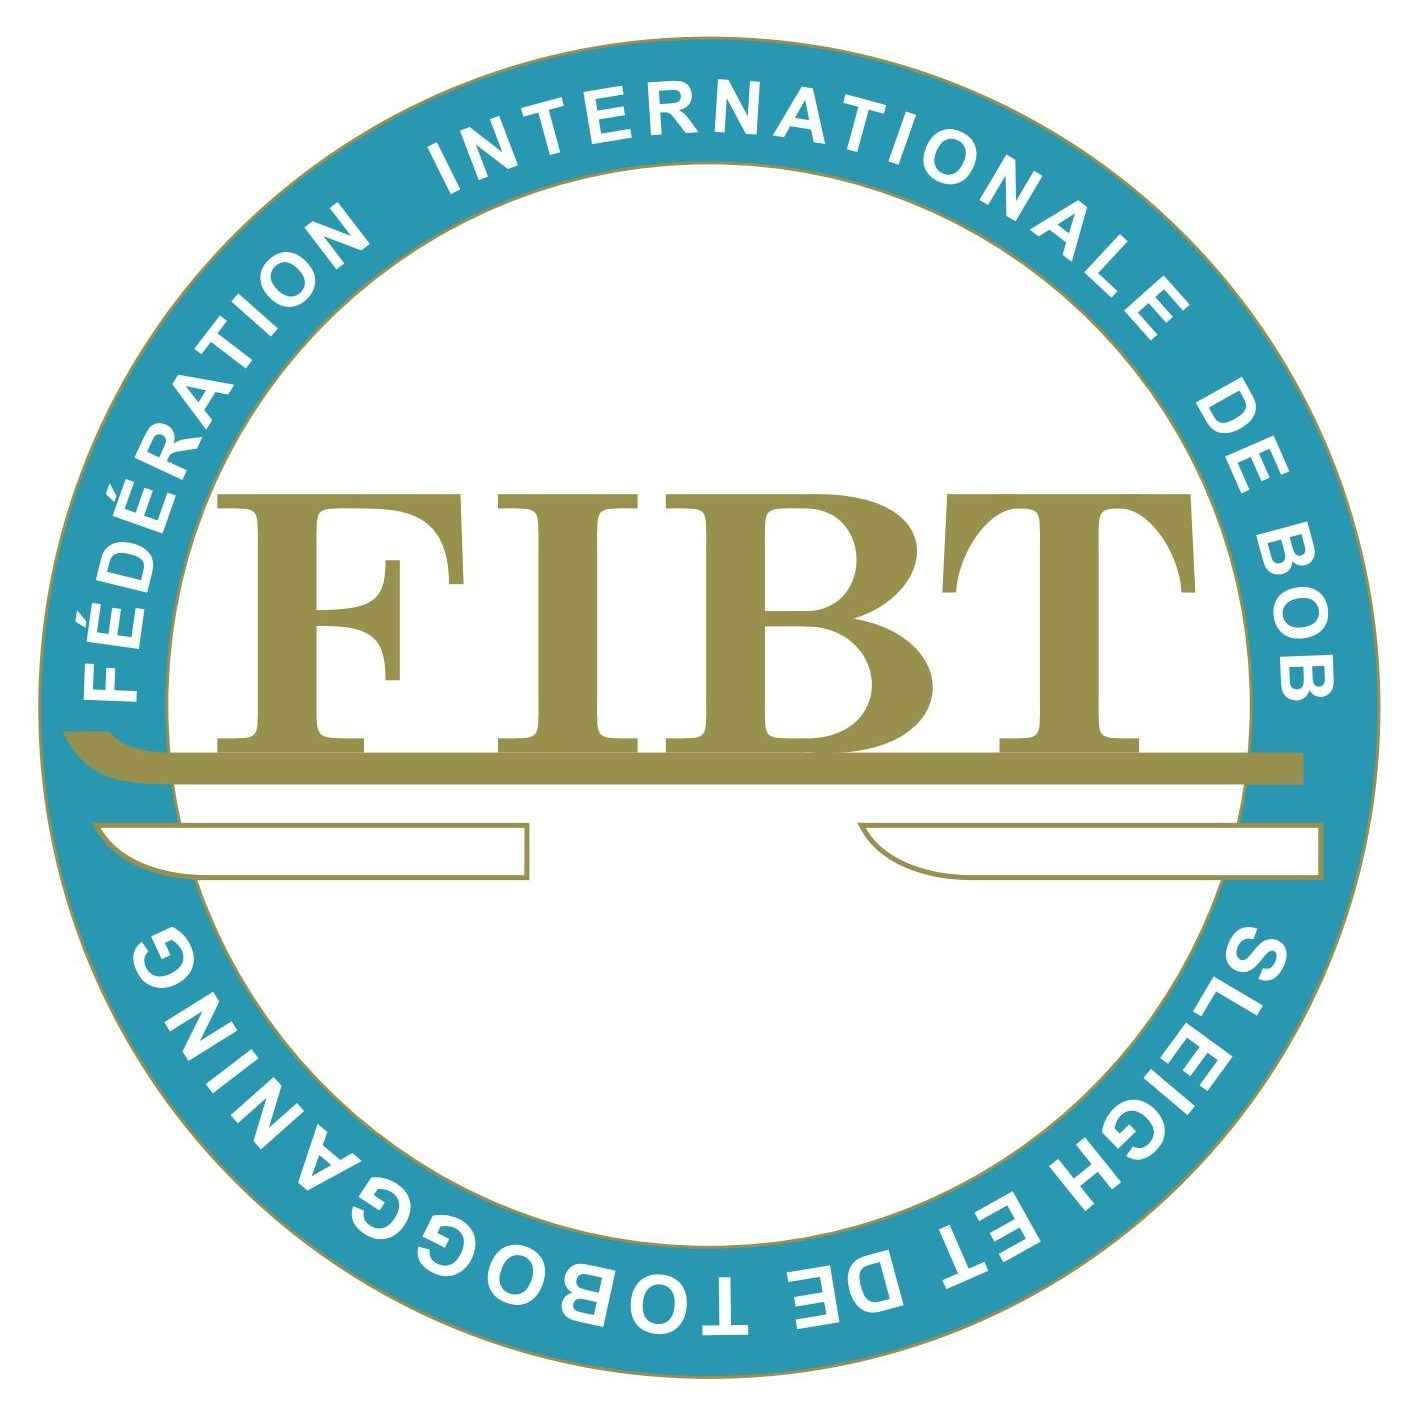 International Bobsleigh & Skeleton Federation (IBSF) Logo [EPS File]